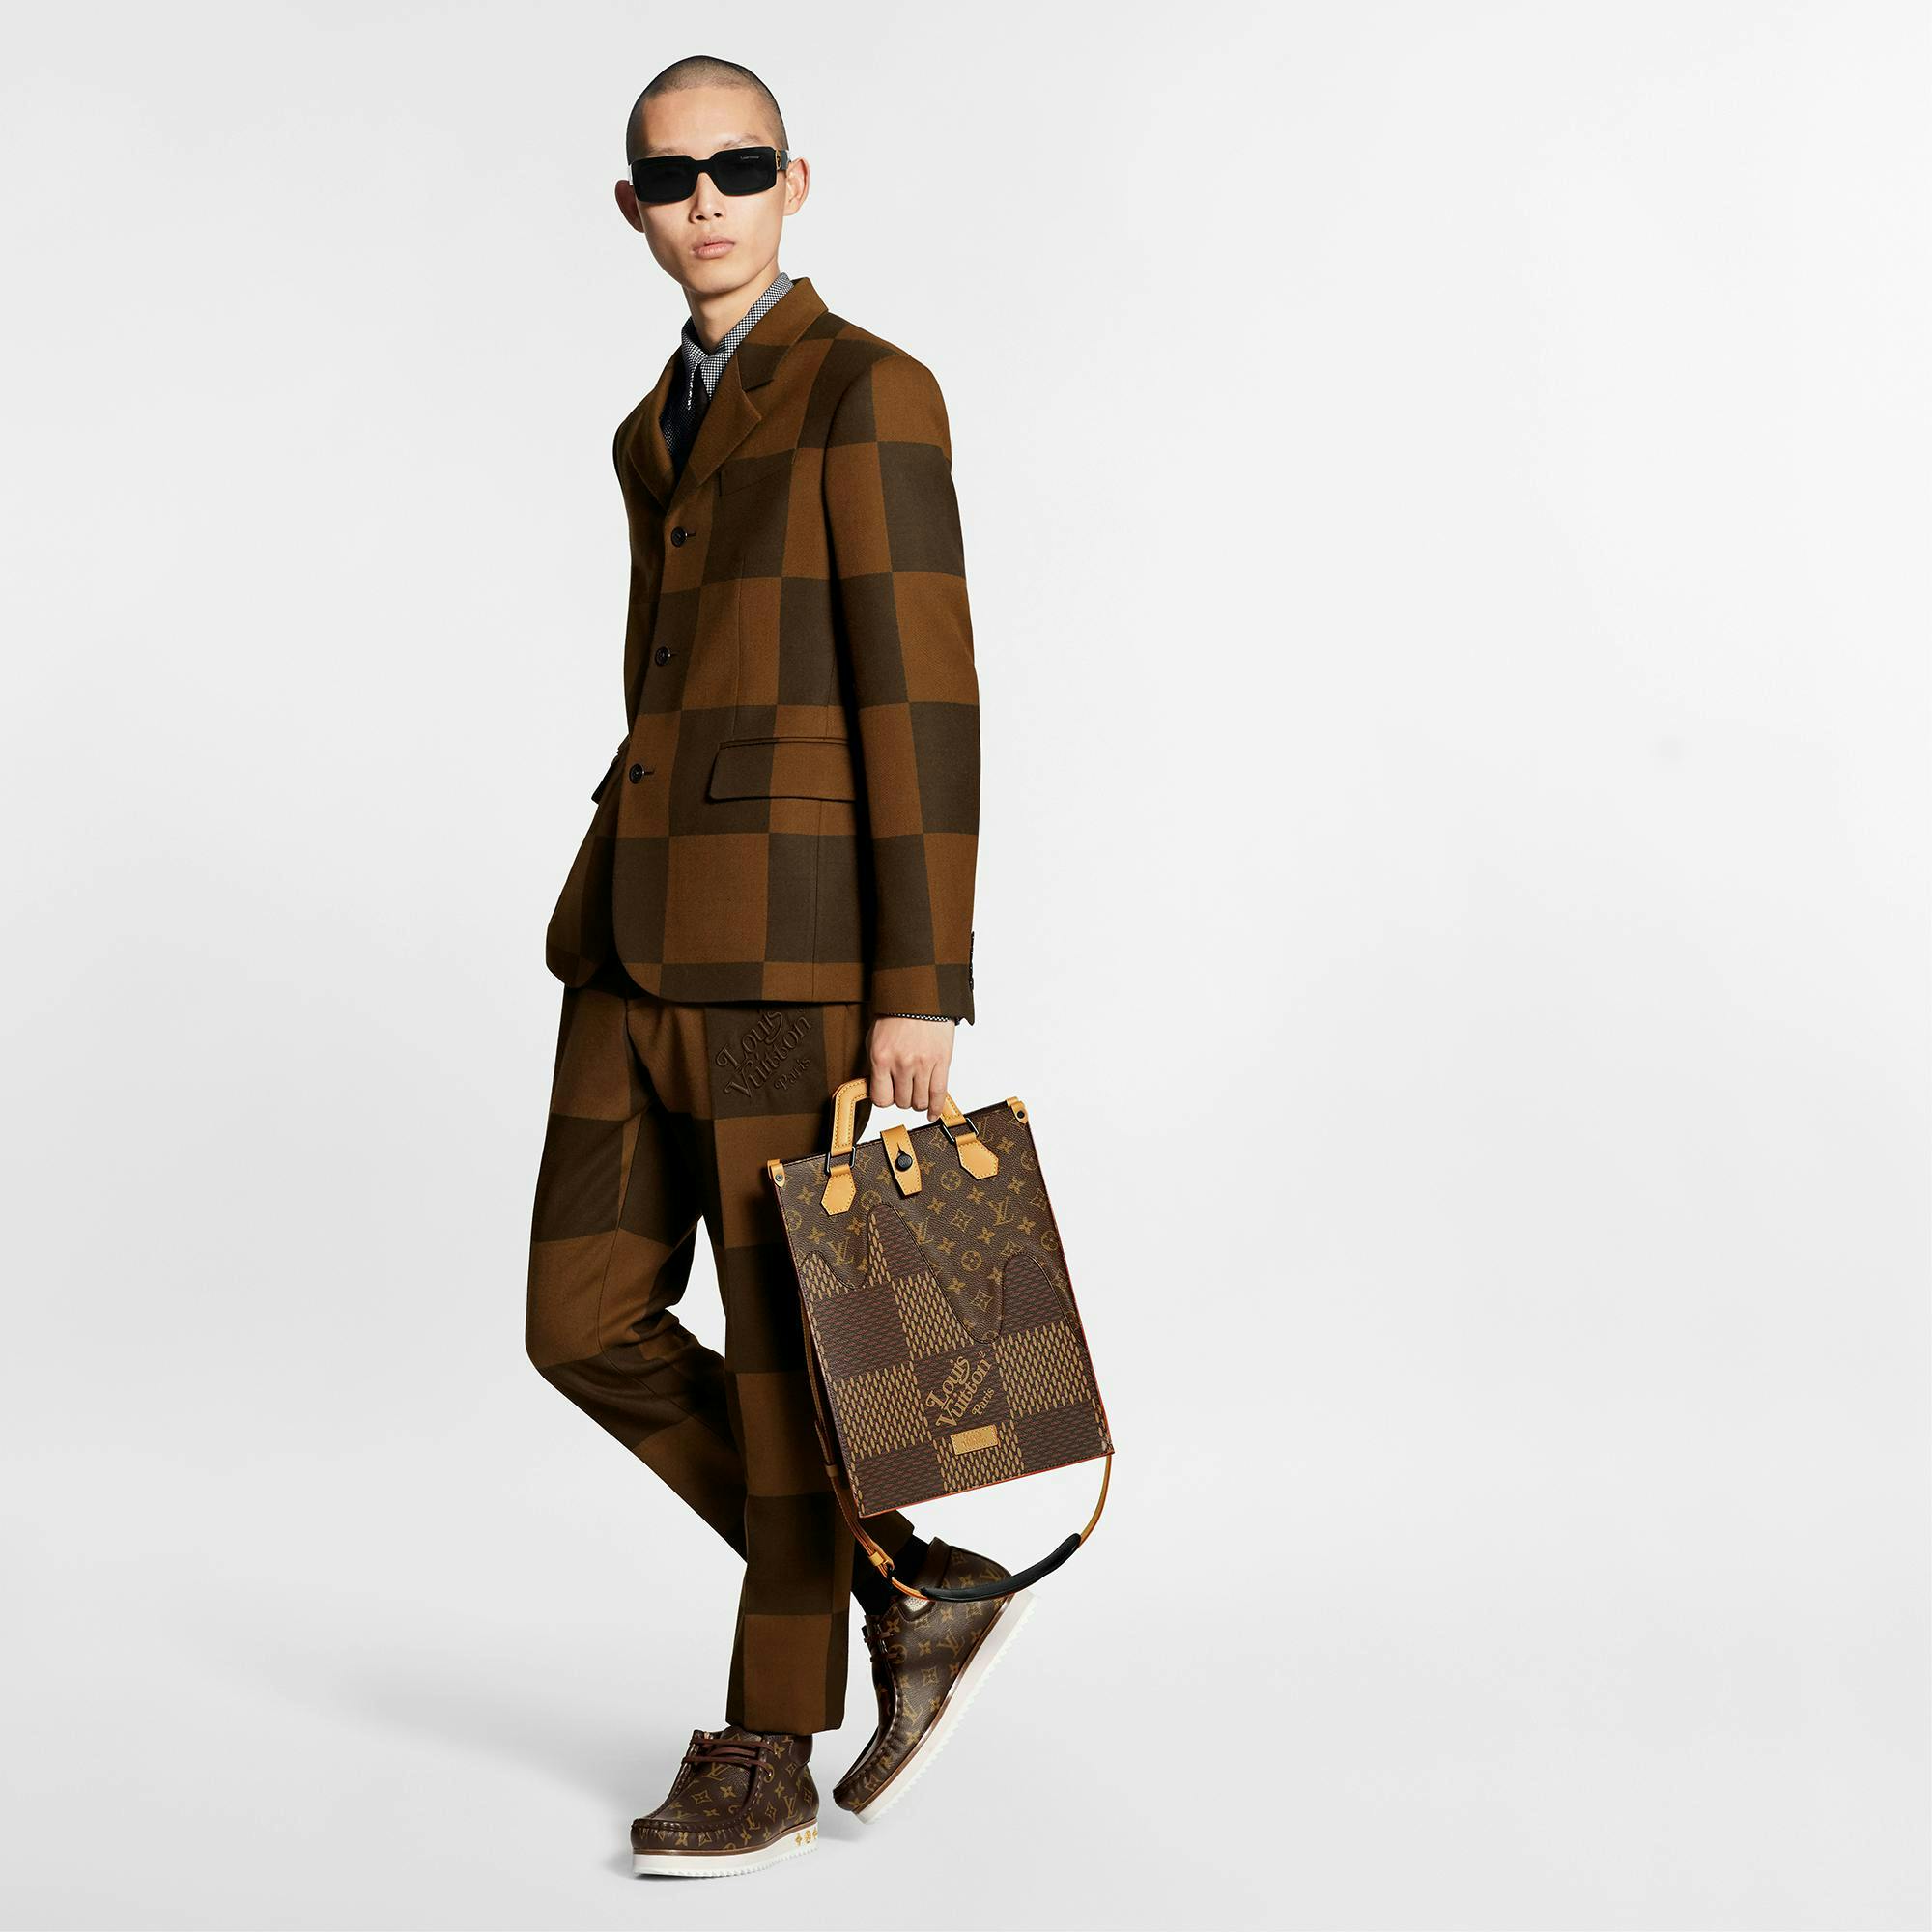 coat long sleeve bag handbag formal wear suit blazer overcoat briefcase fashion